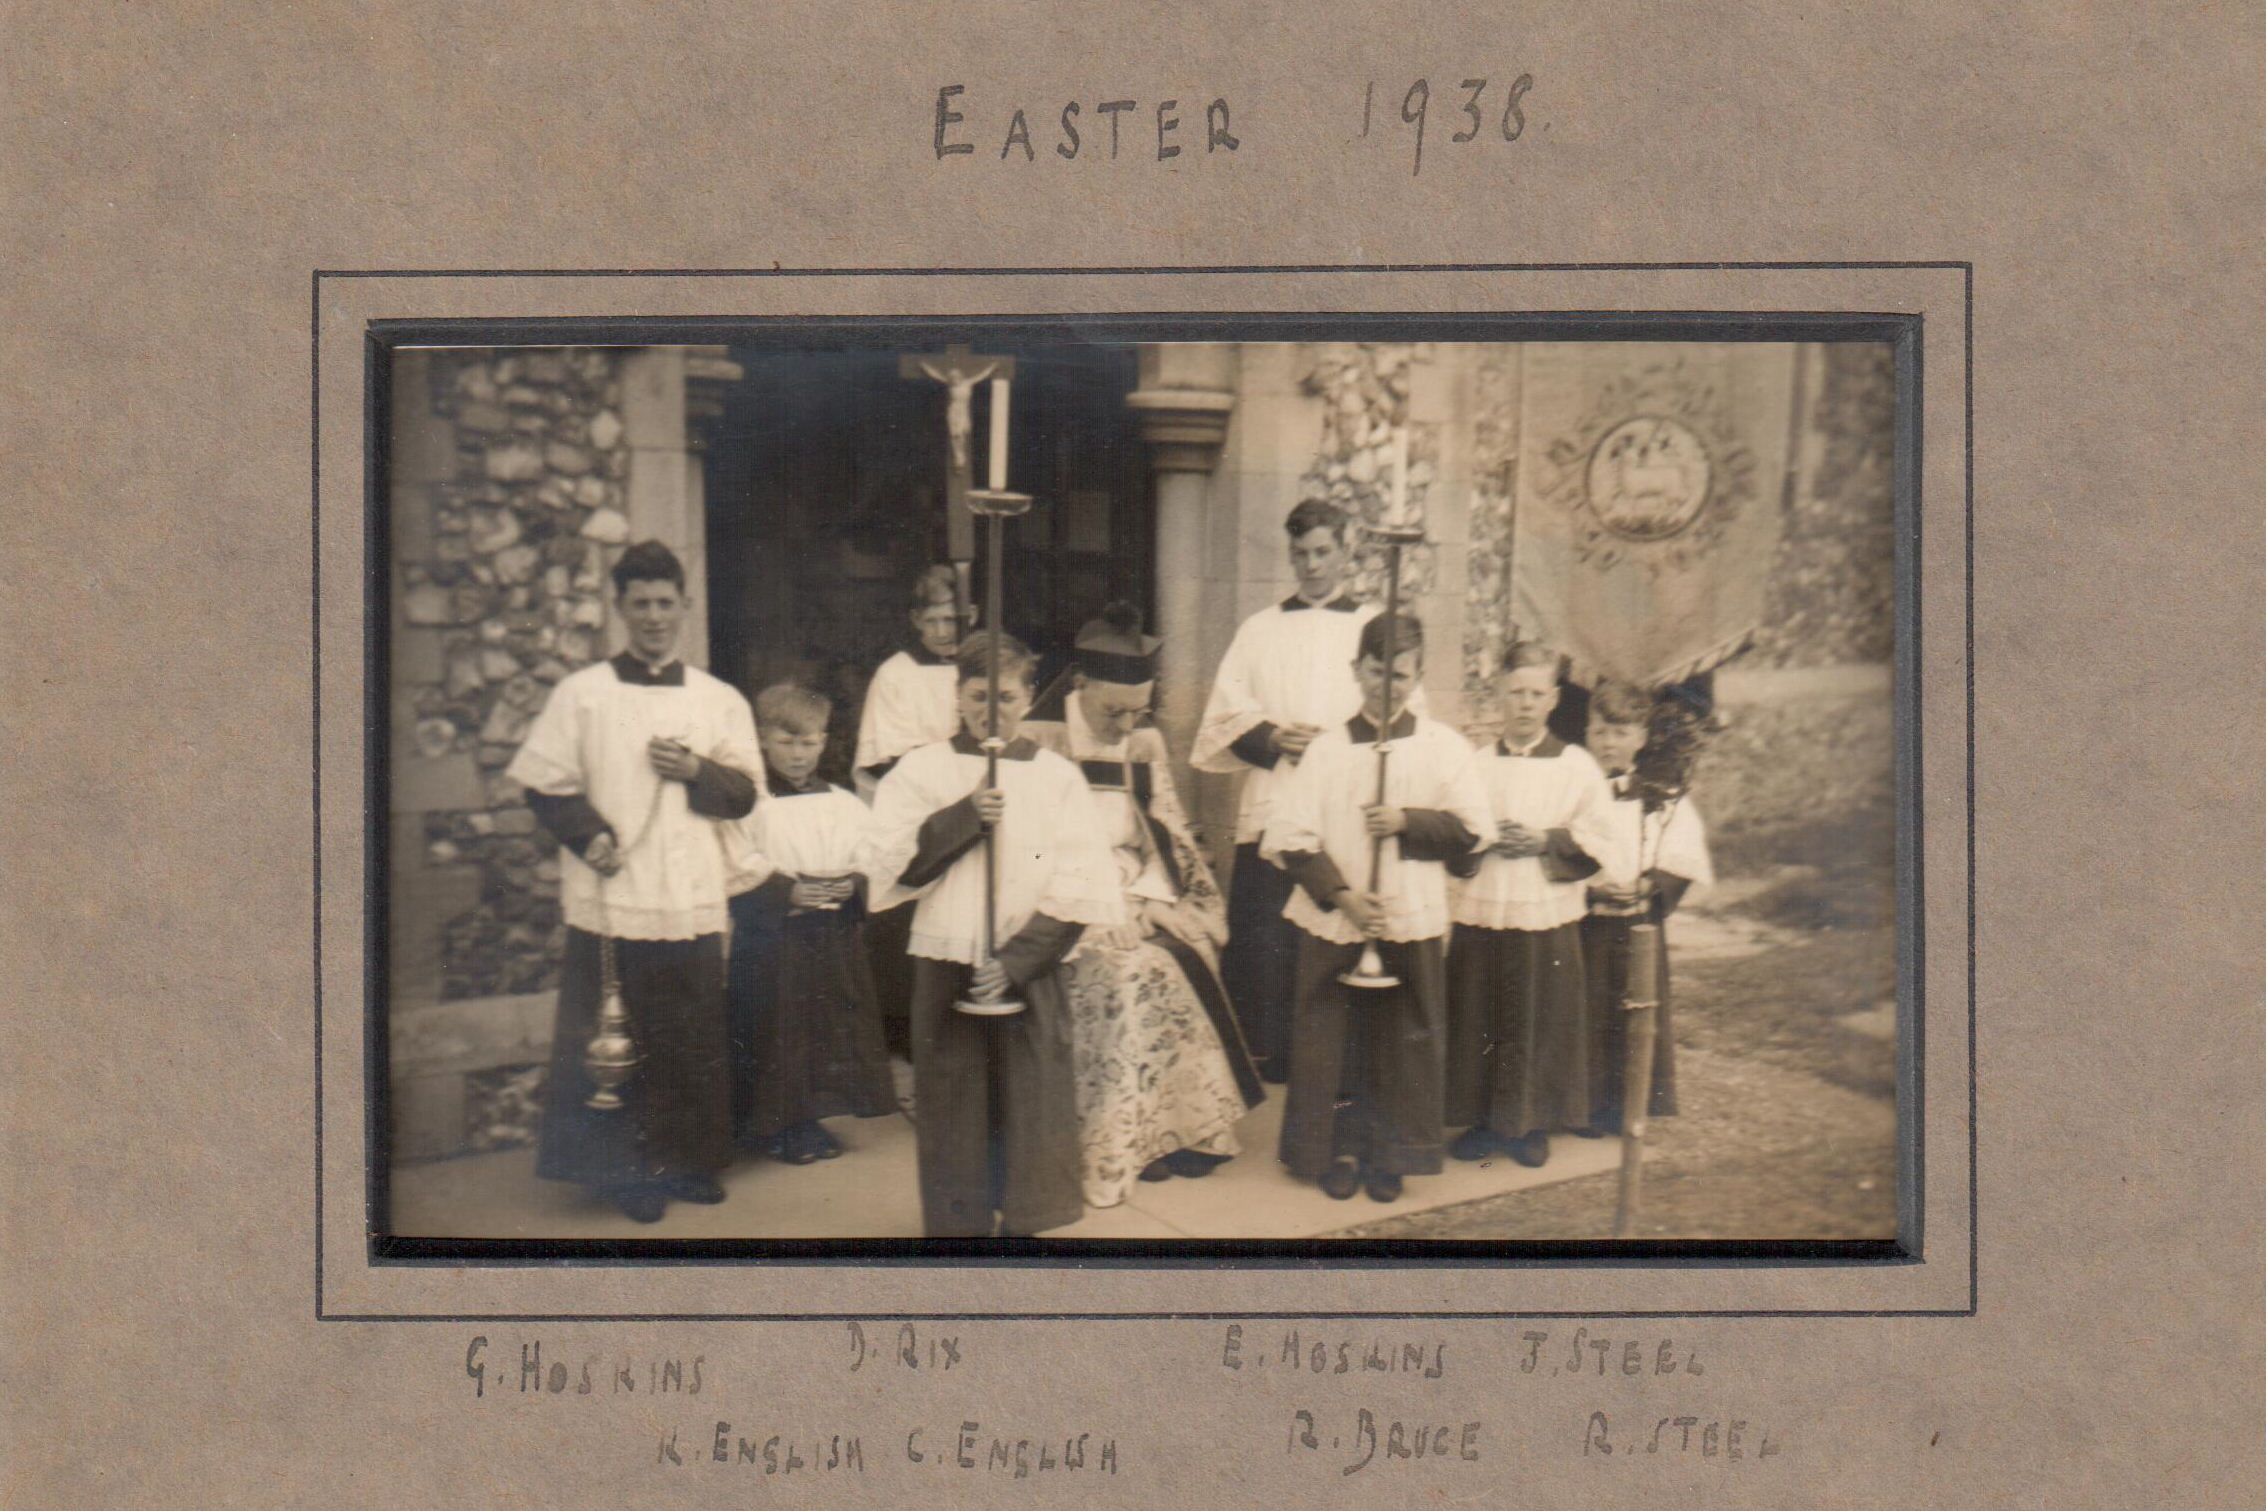 All Saints' Choir Easter 1938